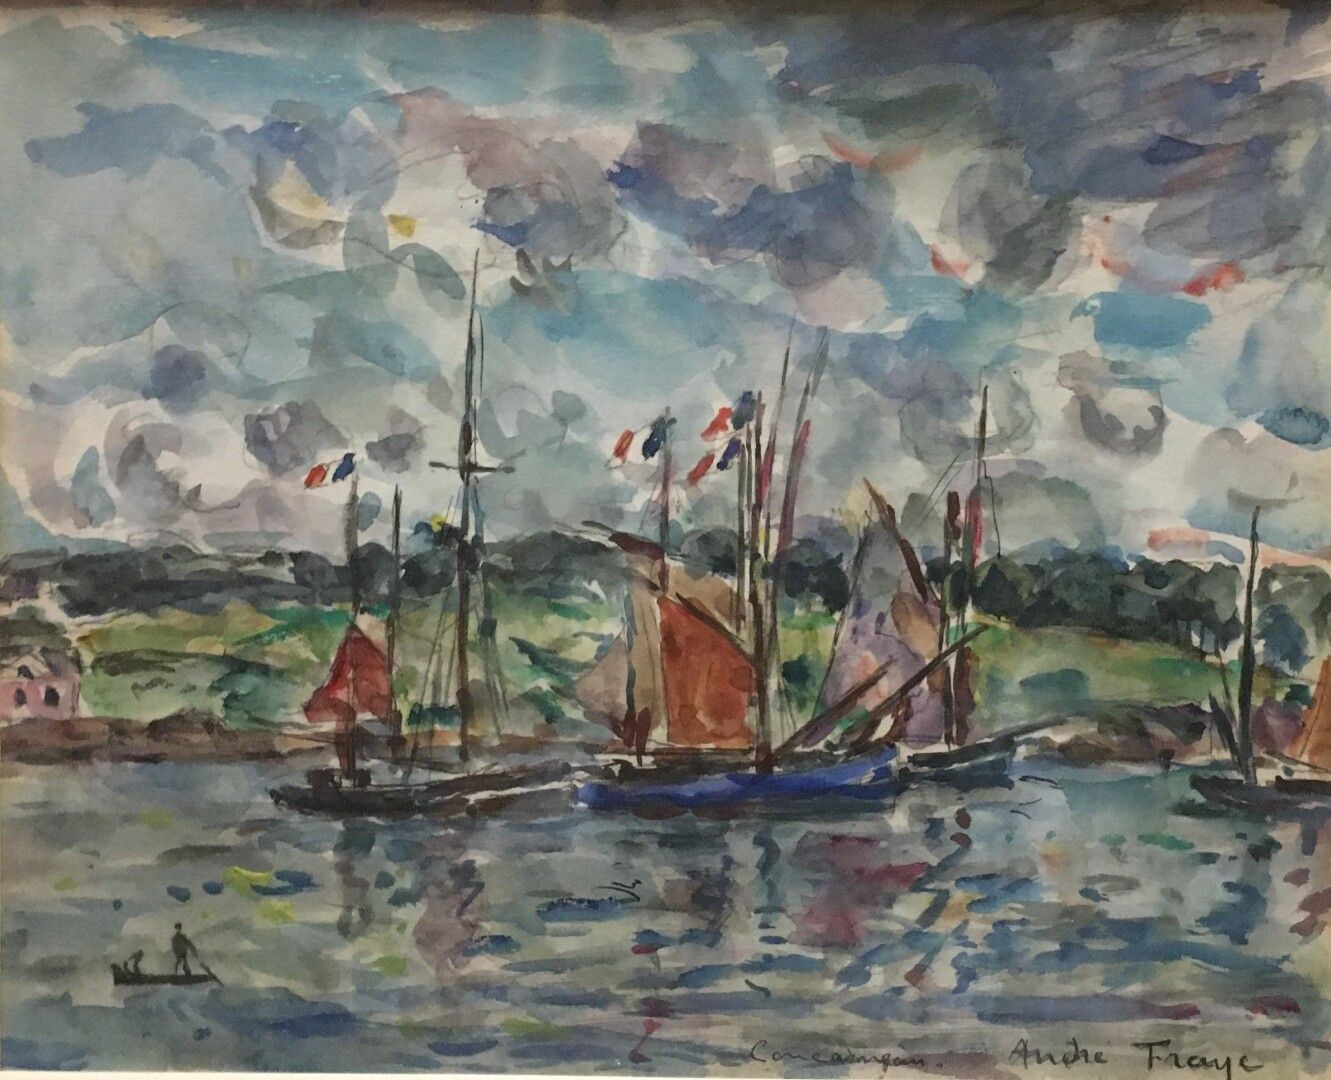 Null 安德烈-弗莱(1887-1963)

康卡诺-拉罗谢尔-尼斯

签名的水彩画作品

23 x 29 cm